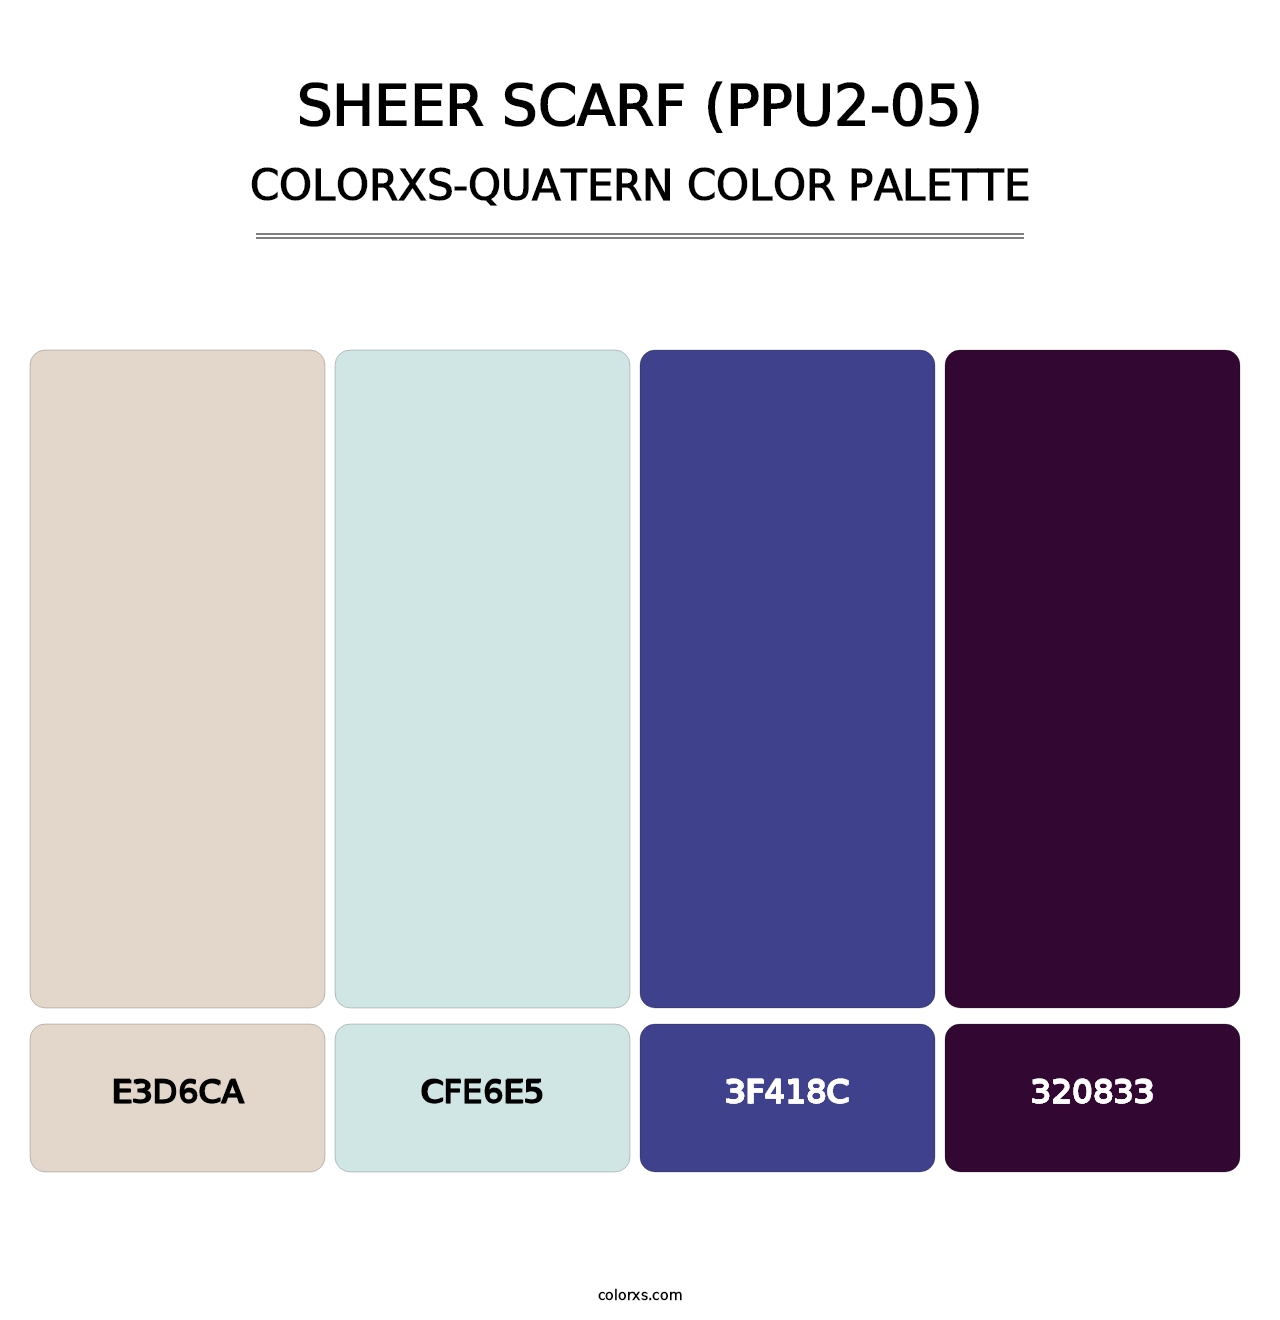 Sheer Scarf (PPU2-05) - Colorxs Quatern Palette